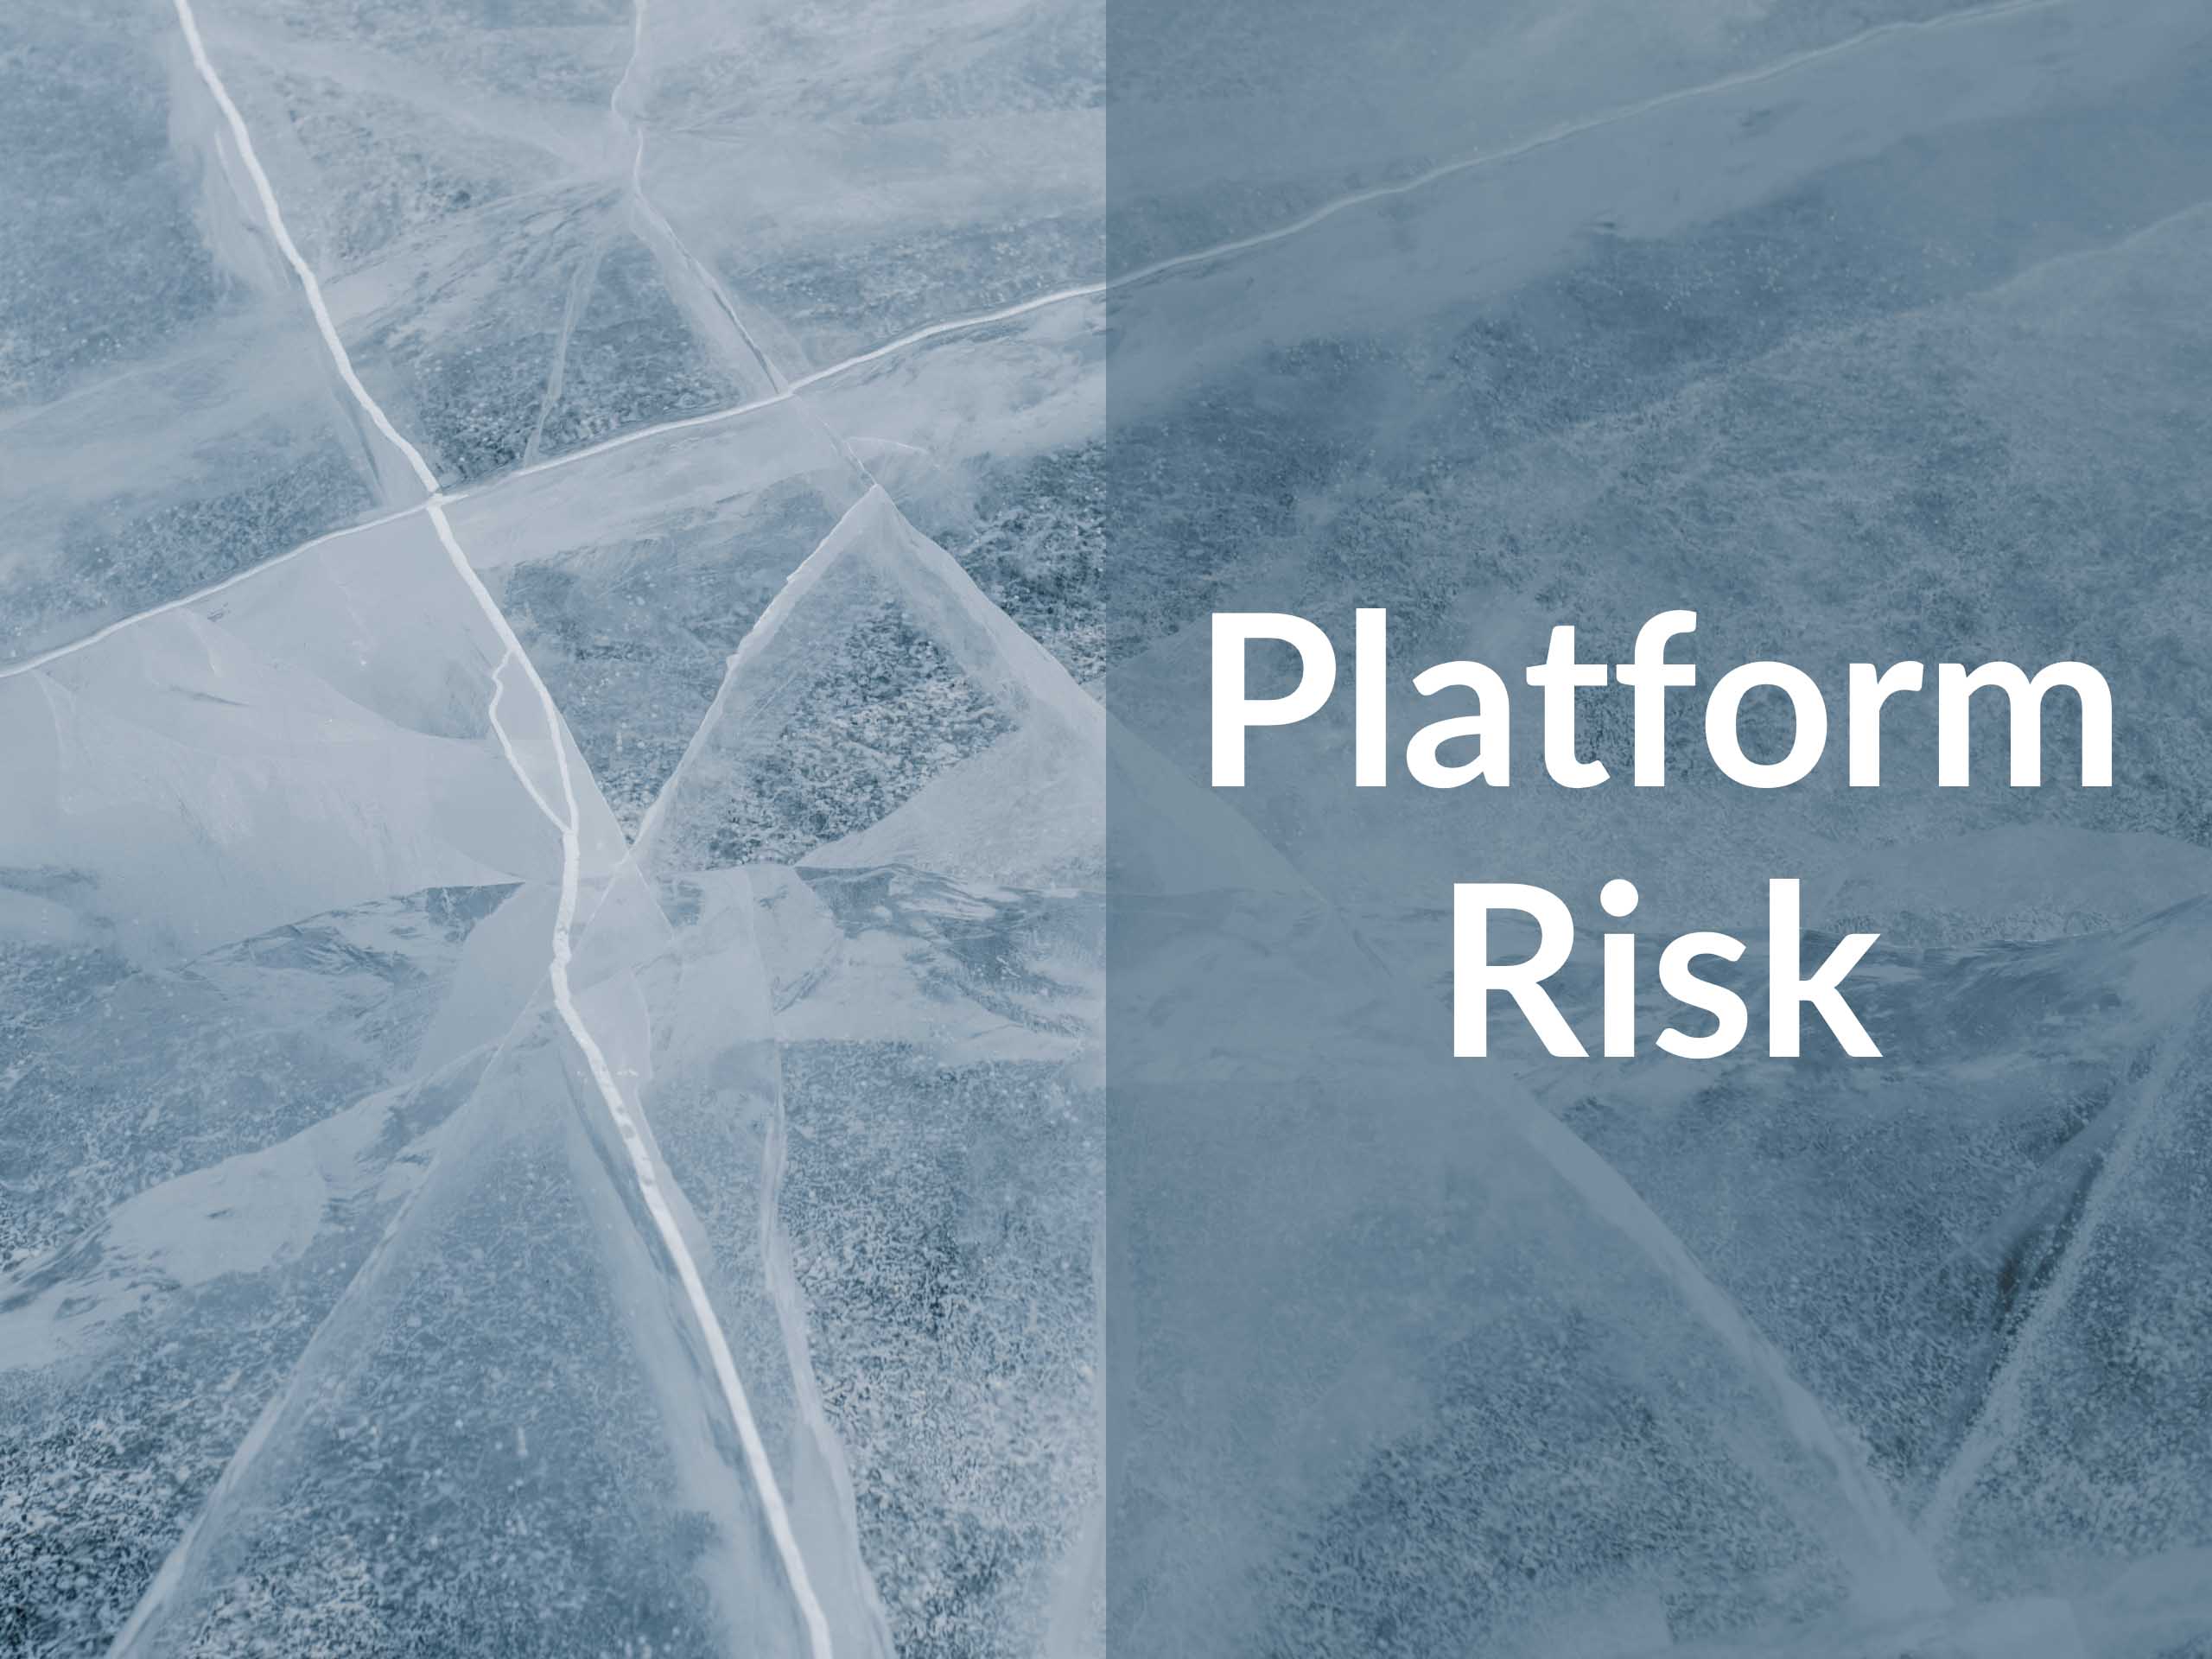 Cracked ice with caption "Platform Risk"